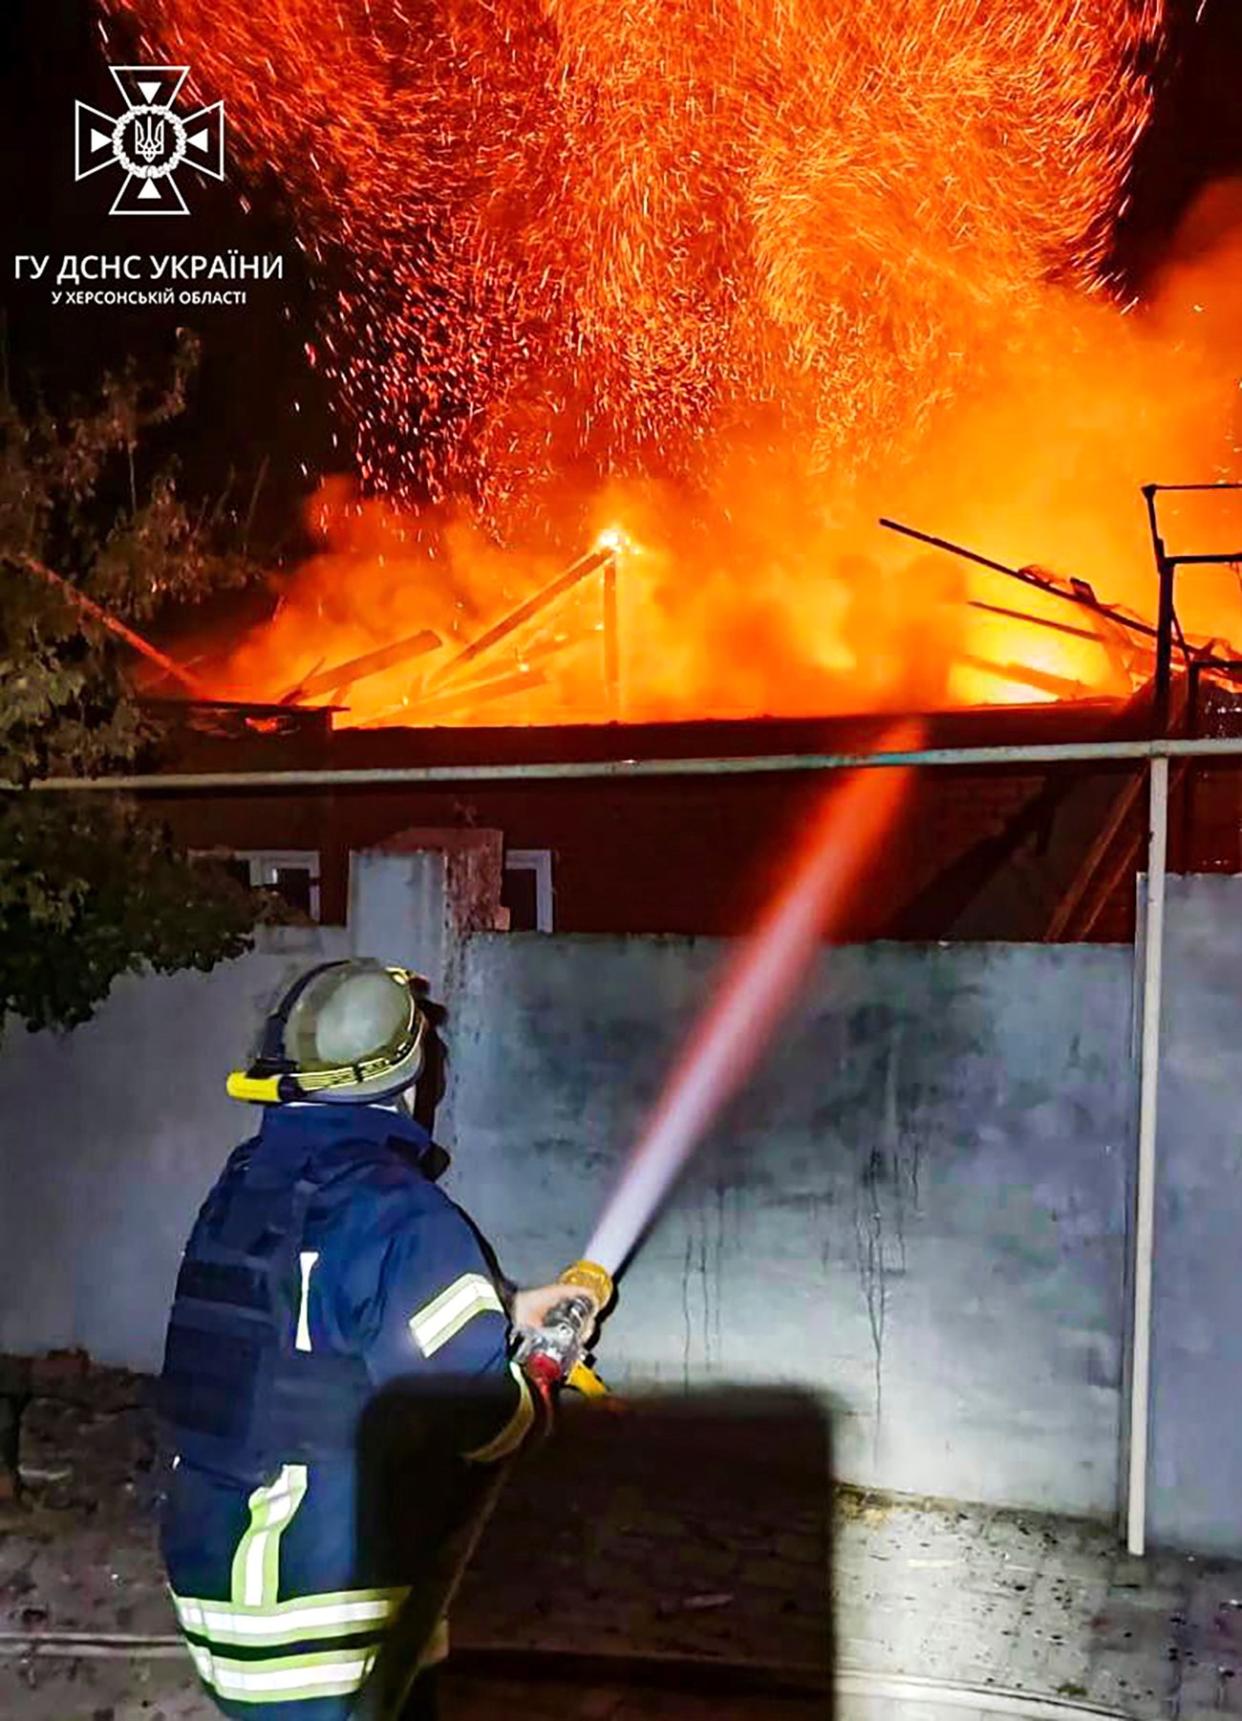 Emergency services personnel work to extinguish a fire in Kherson, Ukraine (AP/ Ukrainian Emergency Service)